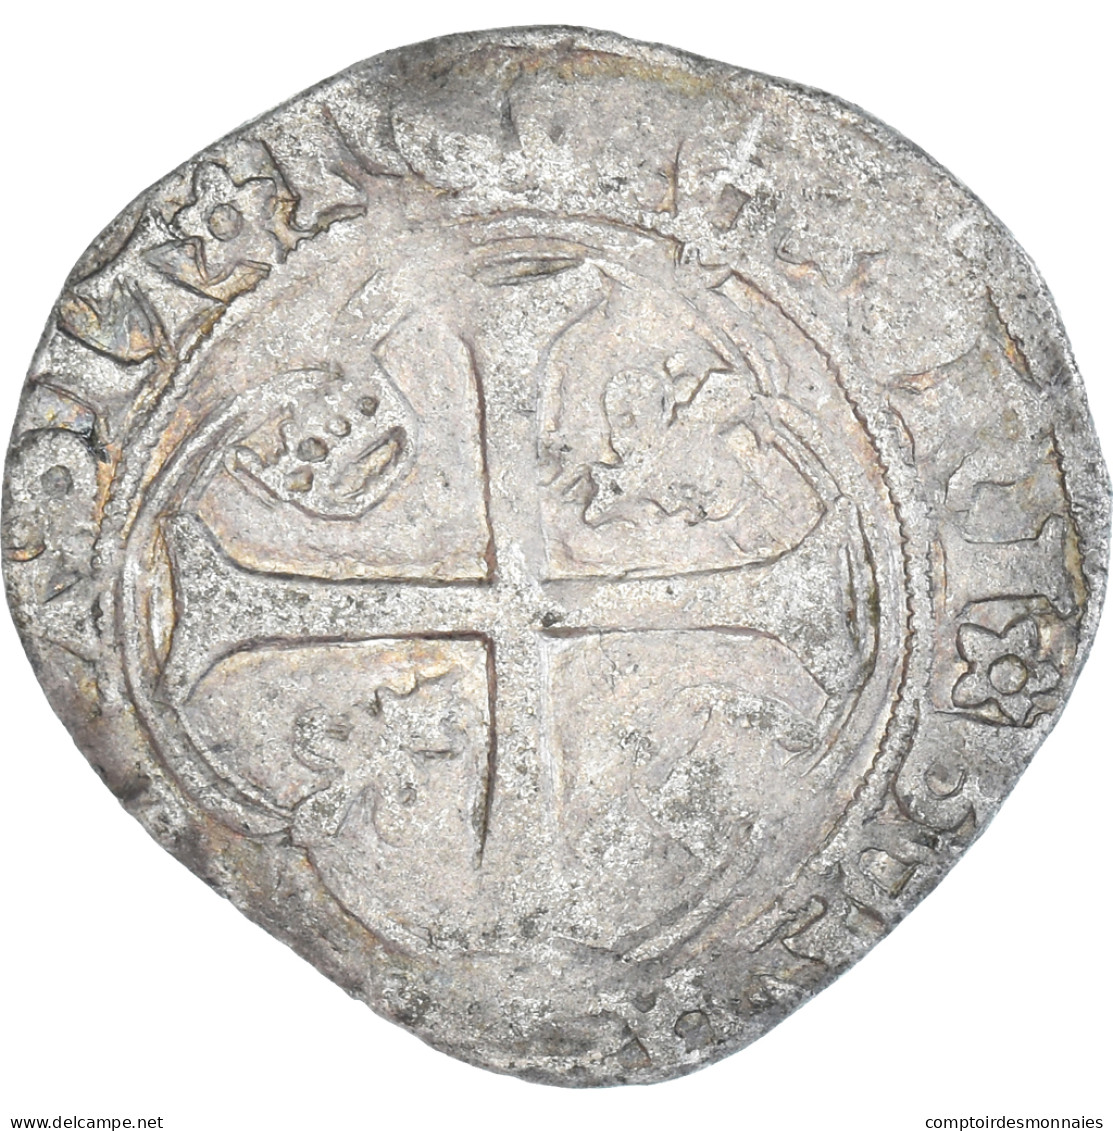 Monnaie, France, Louis XII, Grand Blanc à La Couronne, 1498-1514, Angers, B+ - 1498-1515 Lodewijk XII